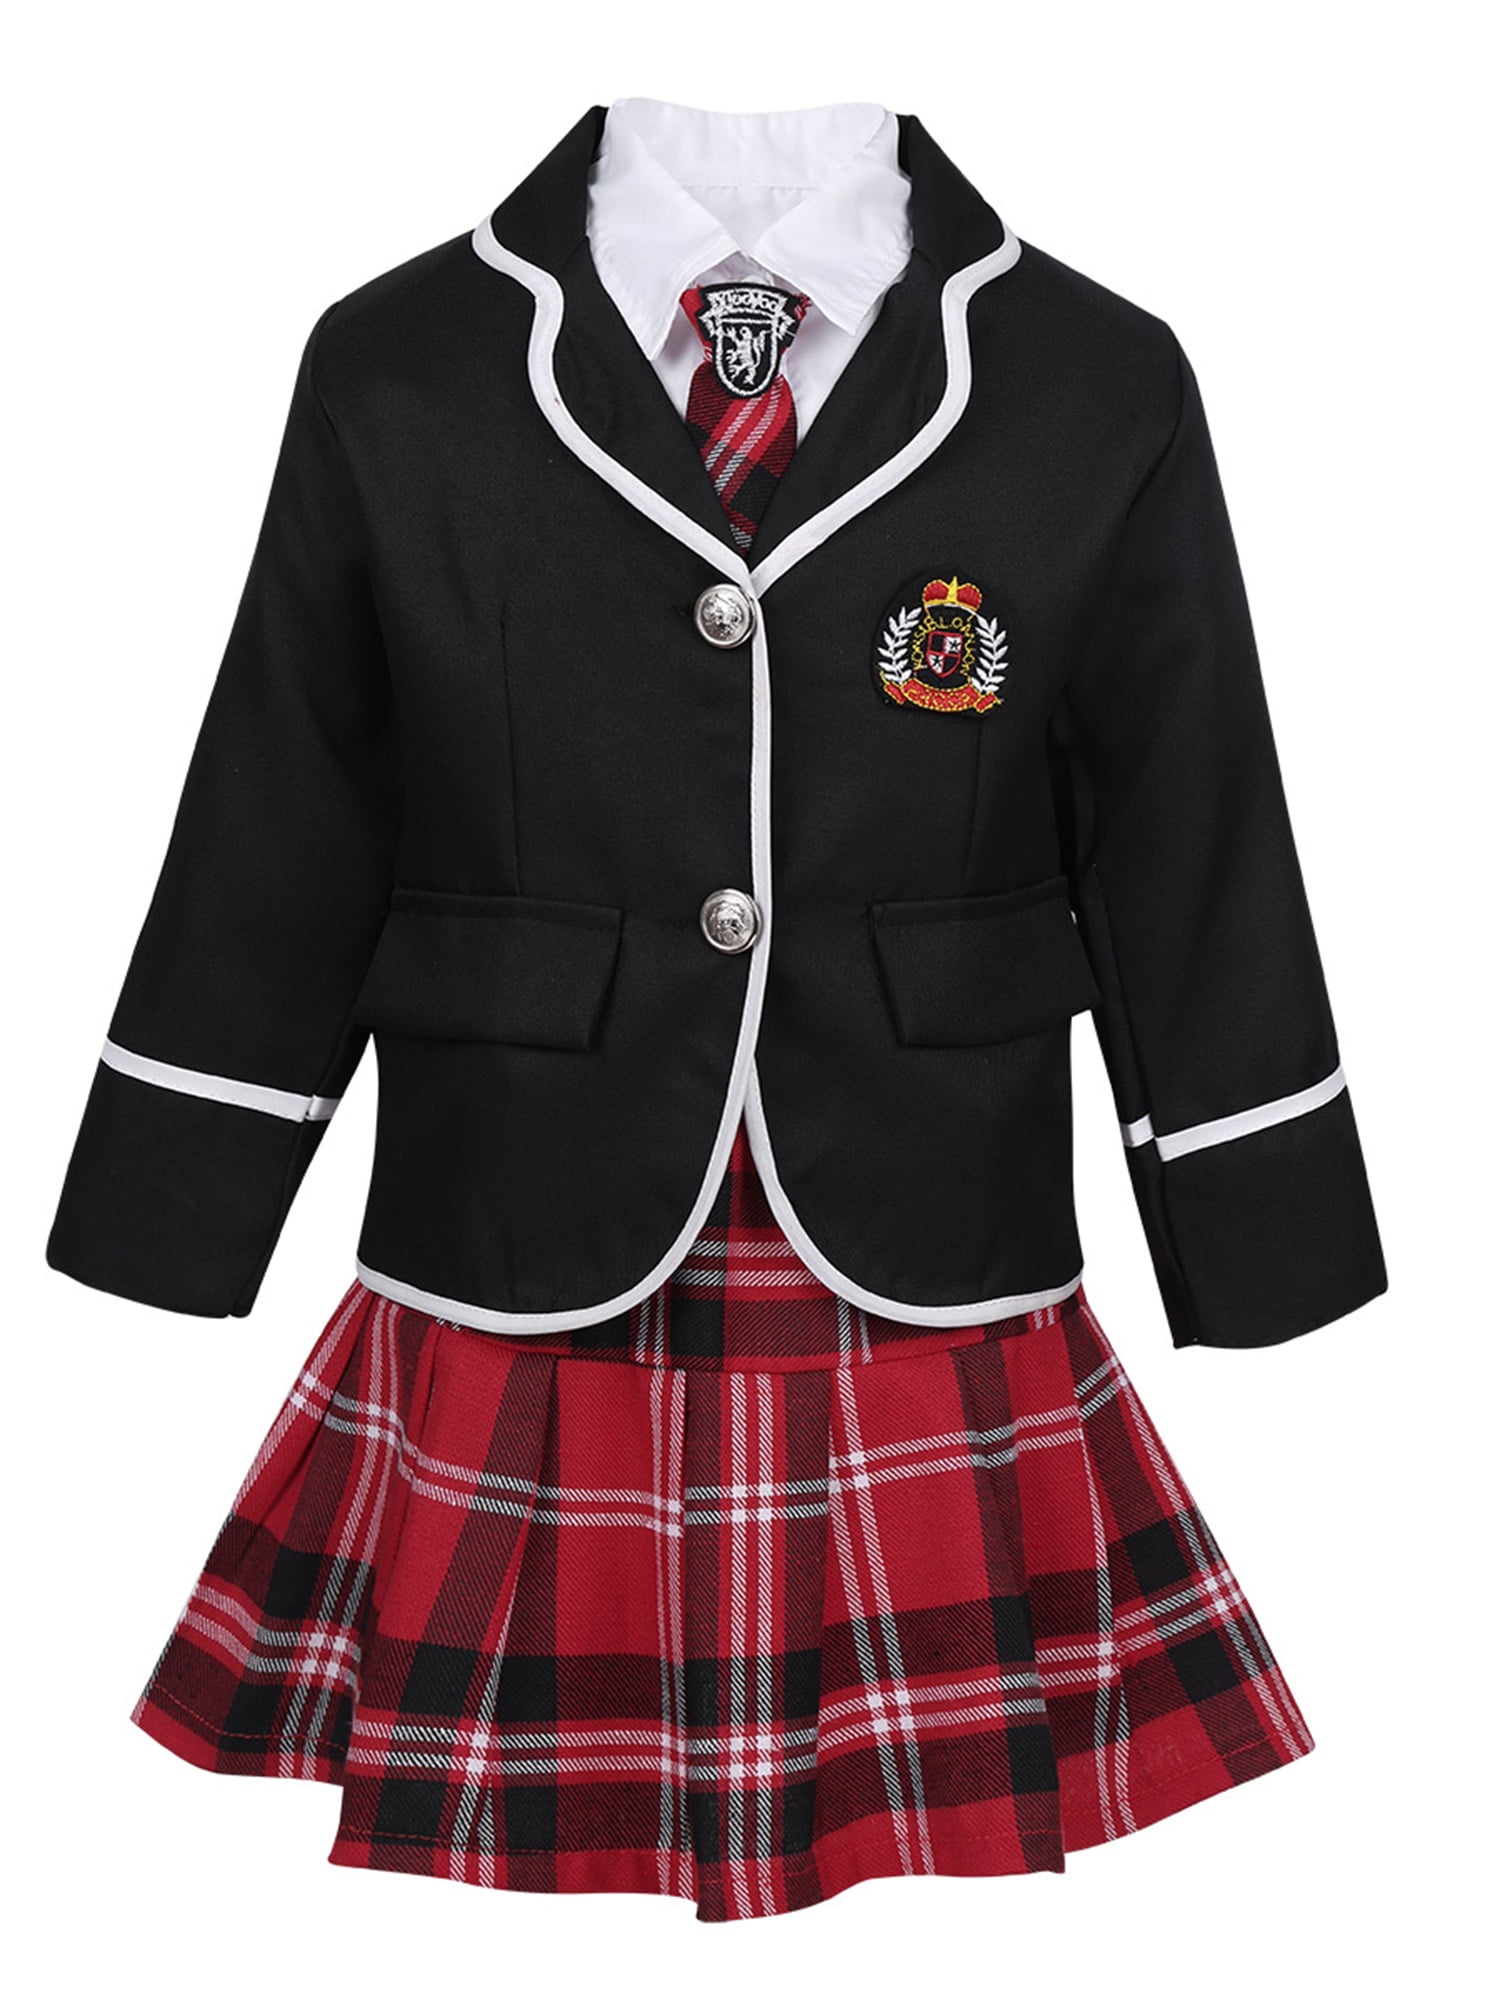 1Set Girl's Sailor Outfit School Uniform Plaid Fashion School Cosplay Costume BT 